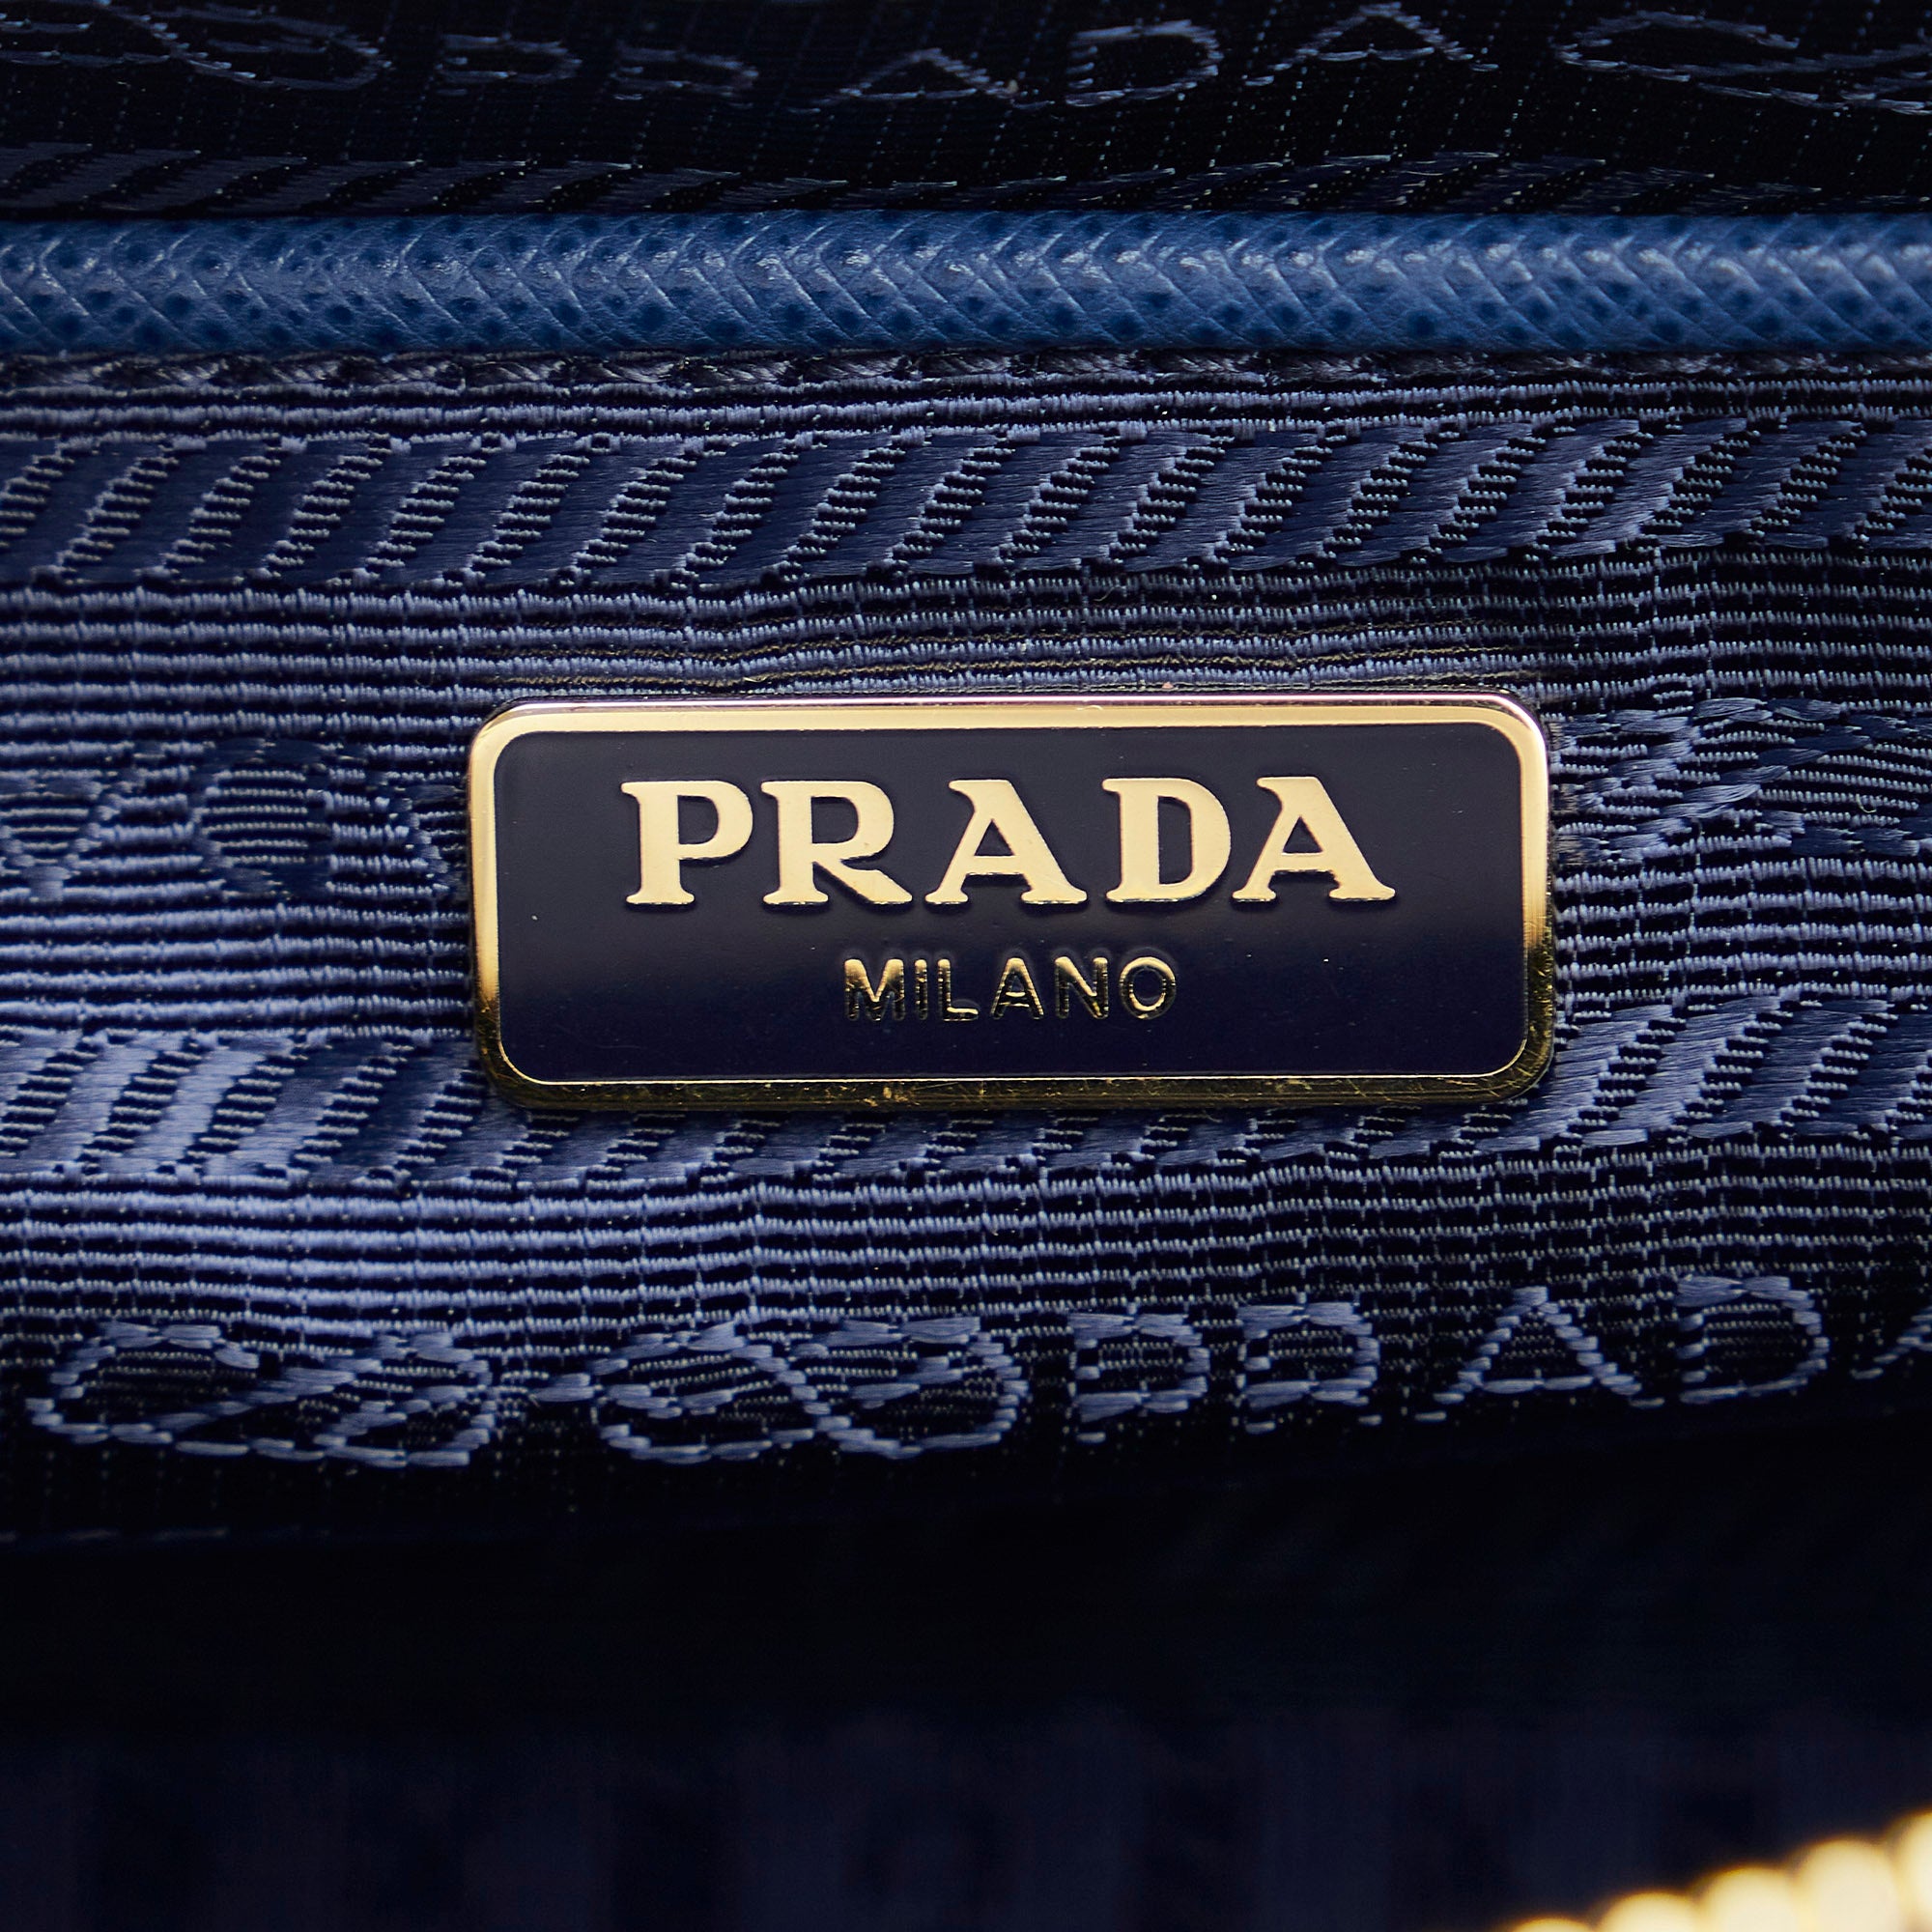 Prada Chain Camera Bag